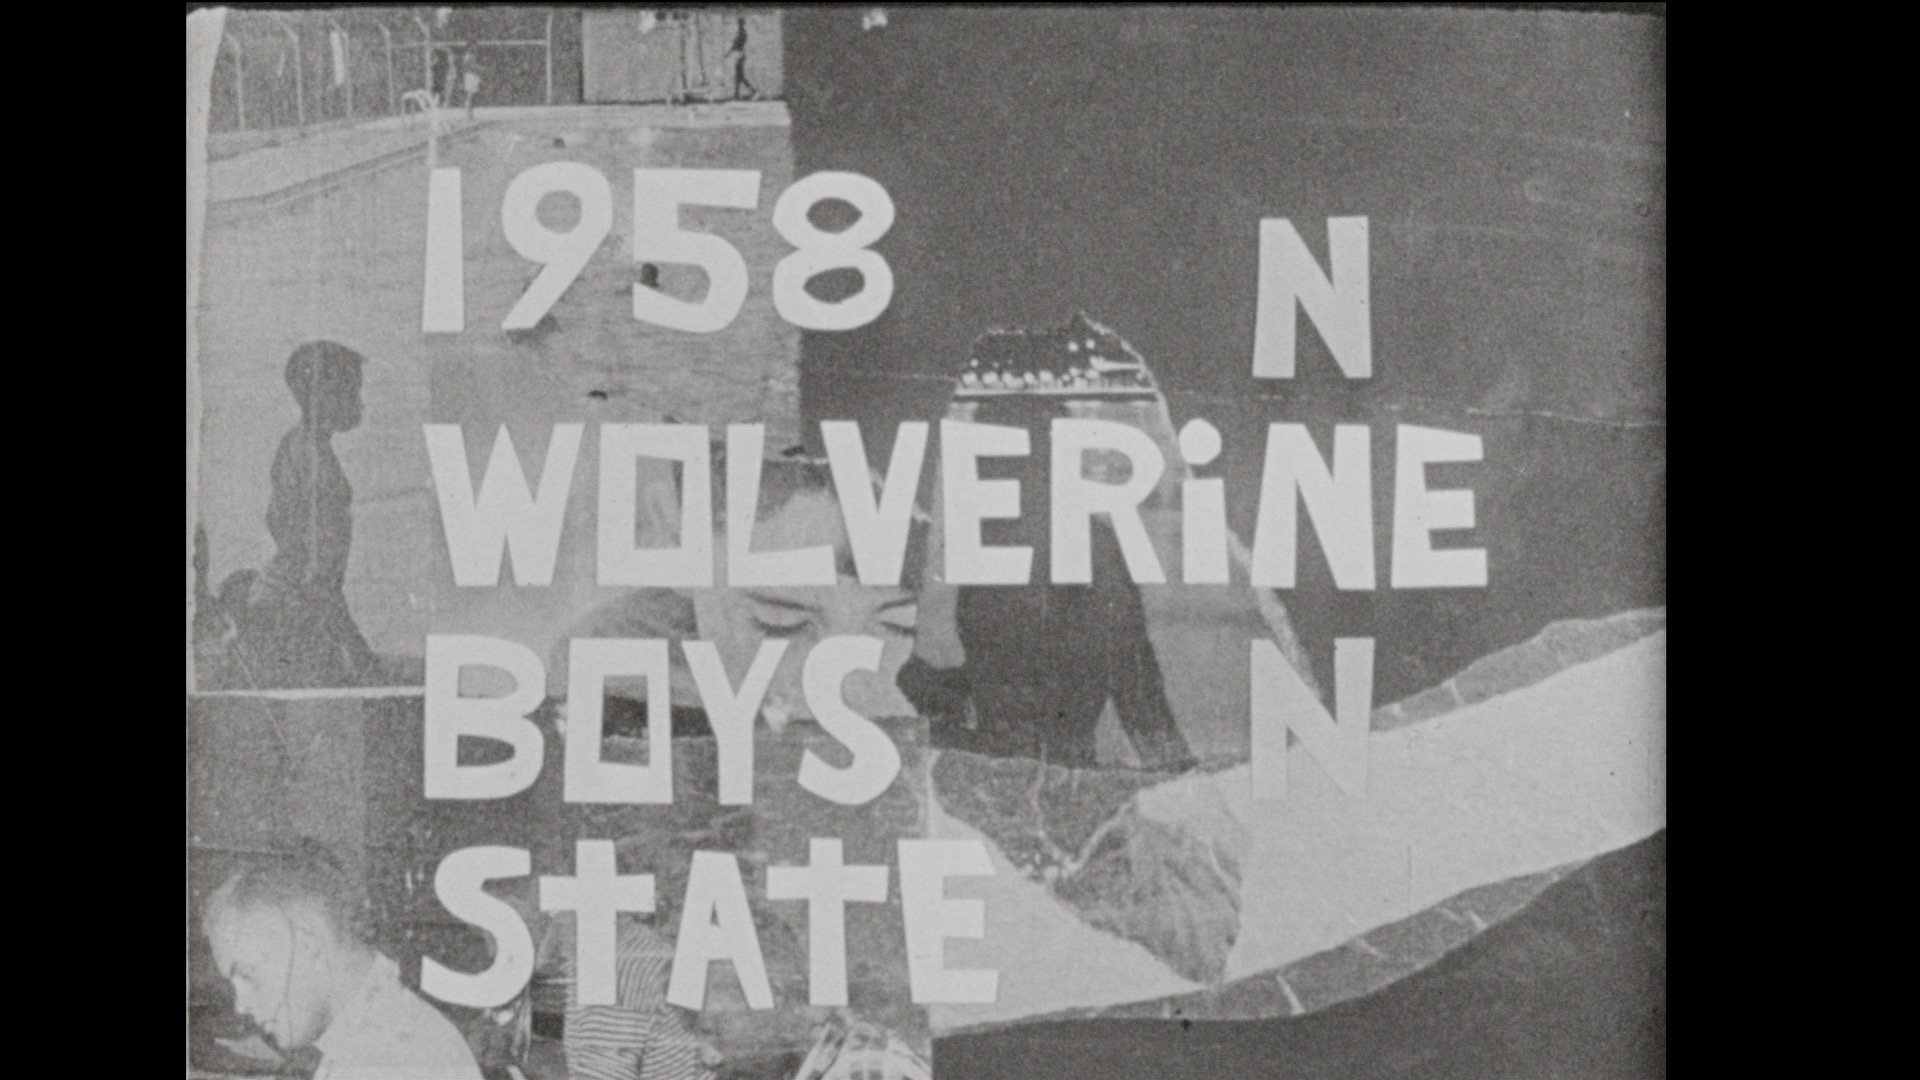 Wolverine Boys' State, 1958